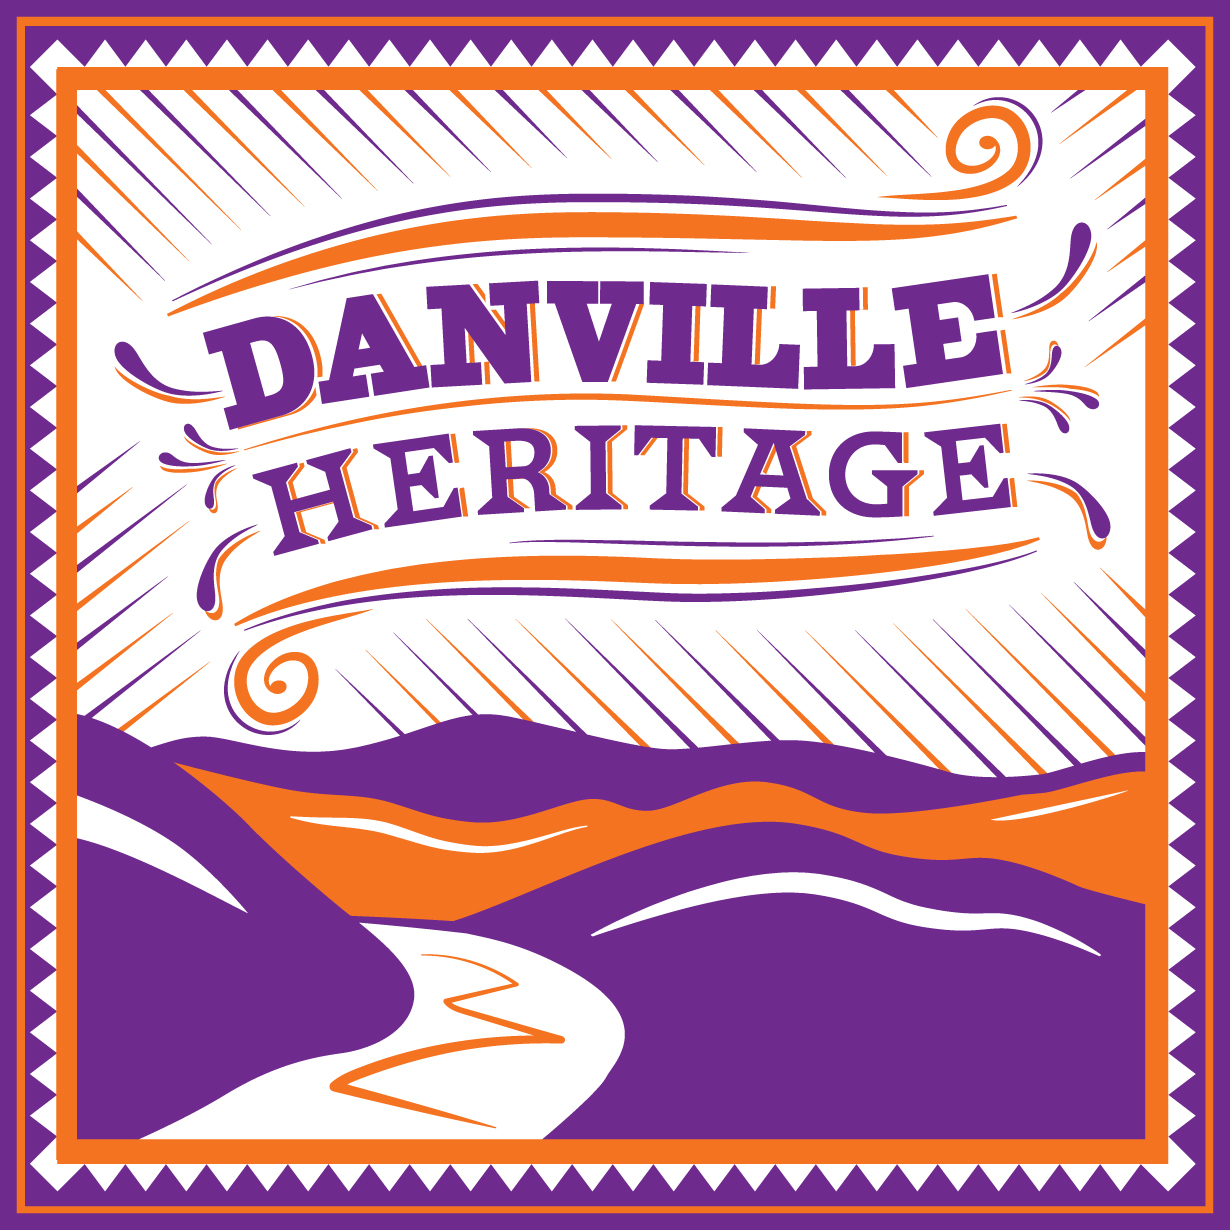 2019 Danville Heritage Festival